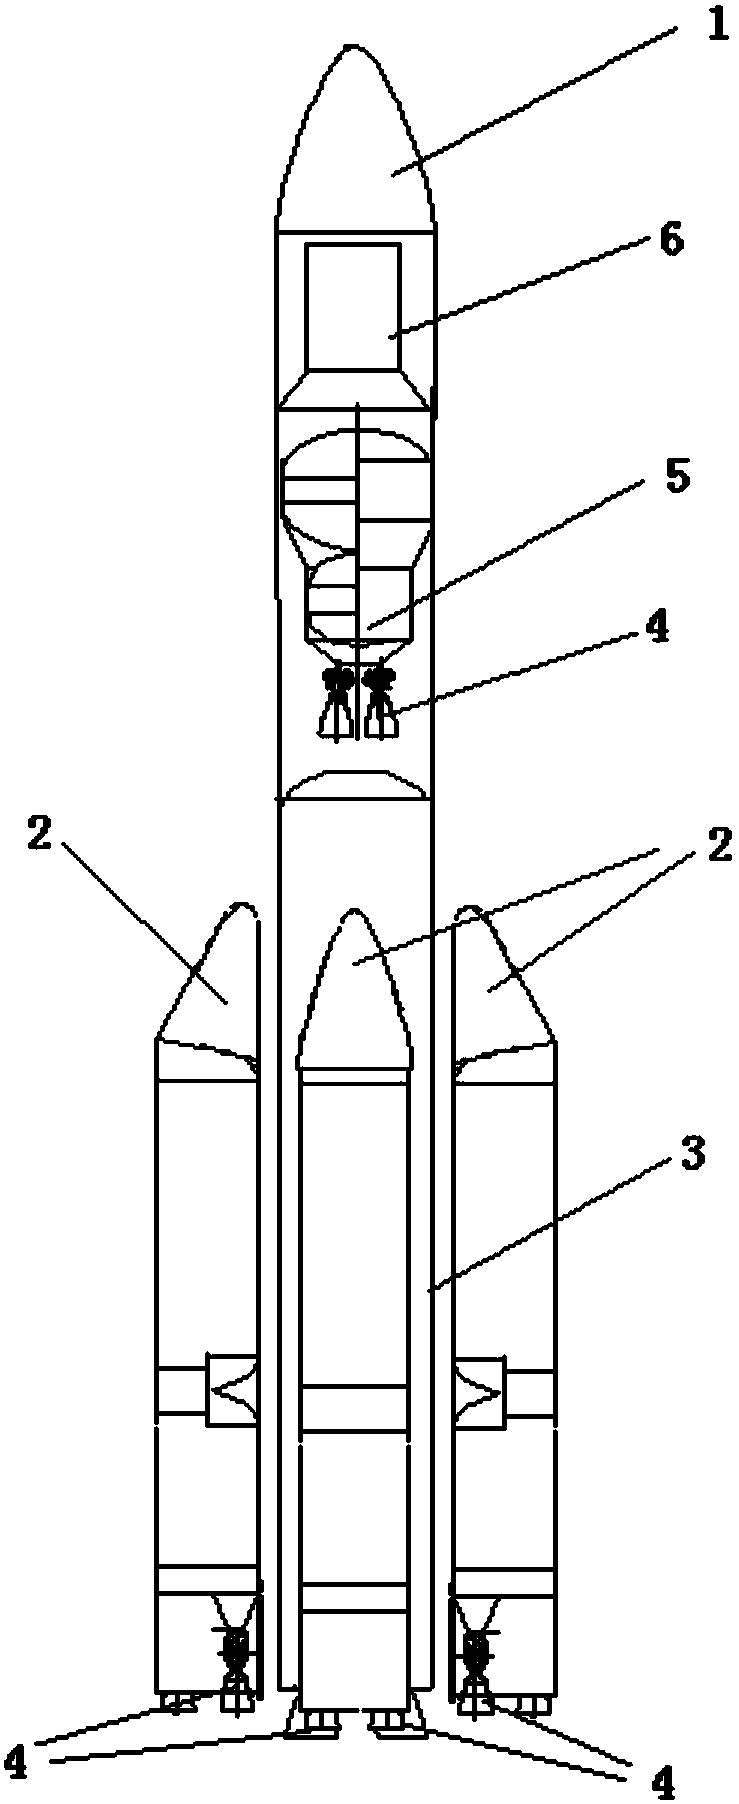 Large diameter strap-on carrier rocket modal test measurement point arrangement and optimization method